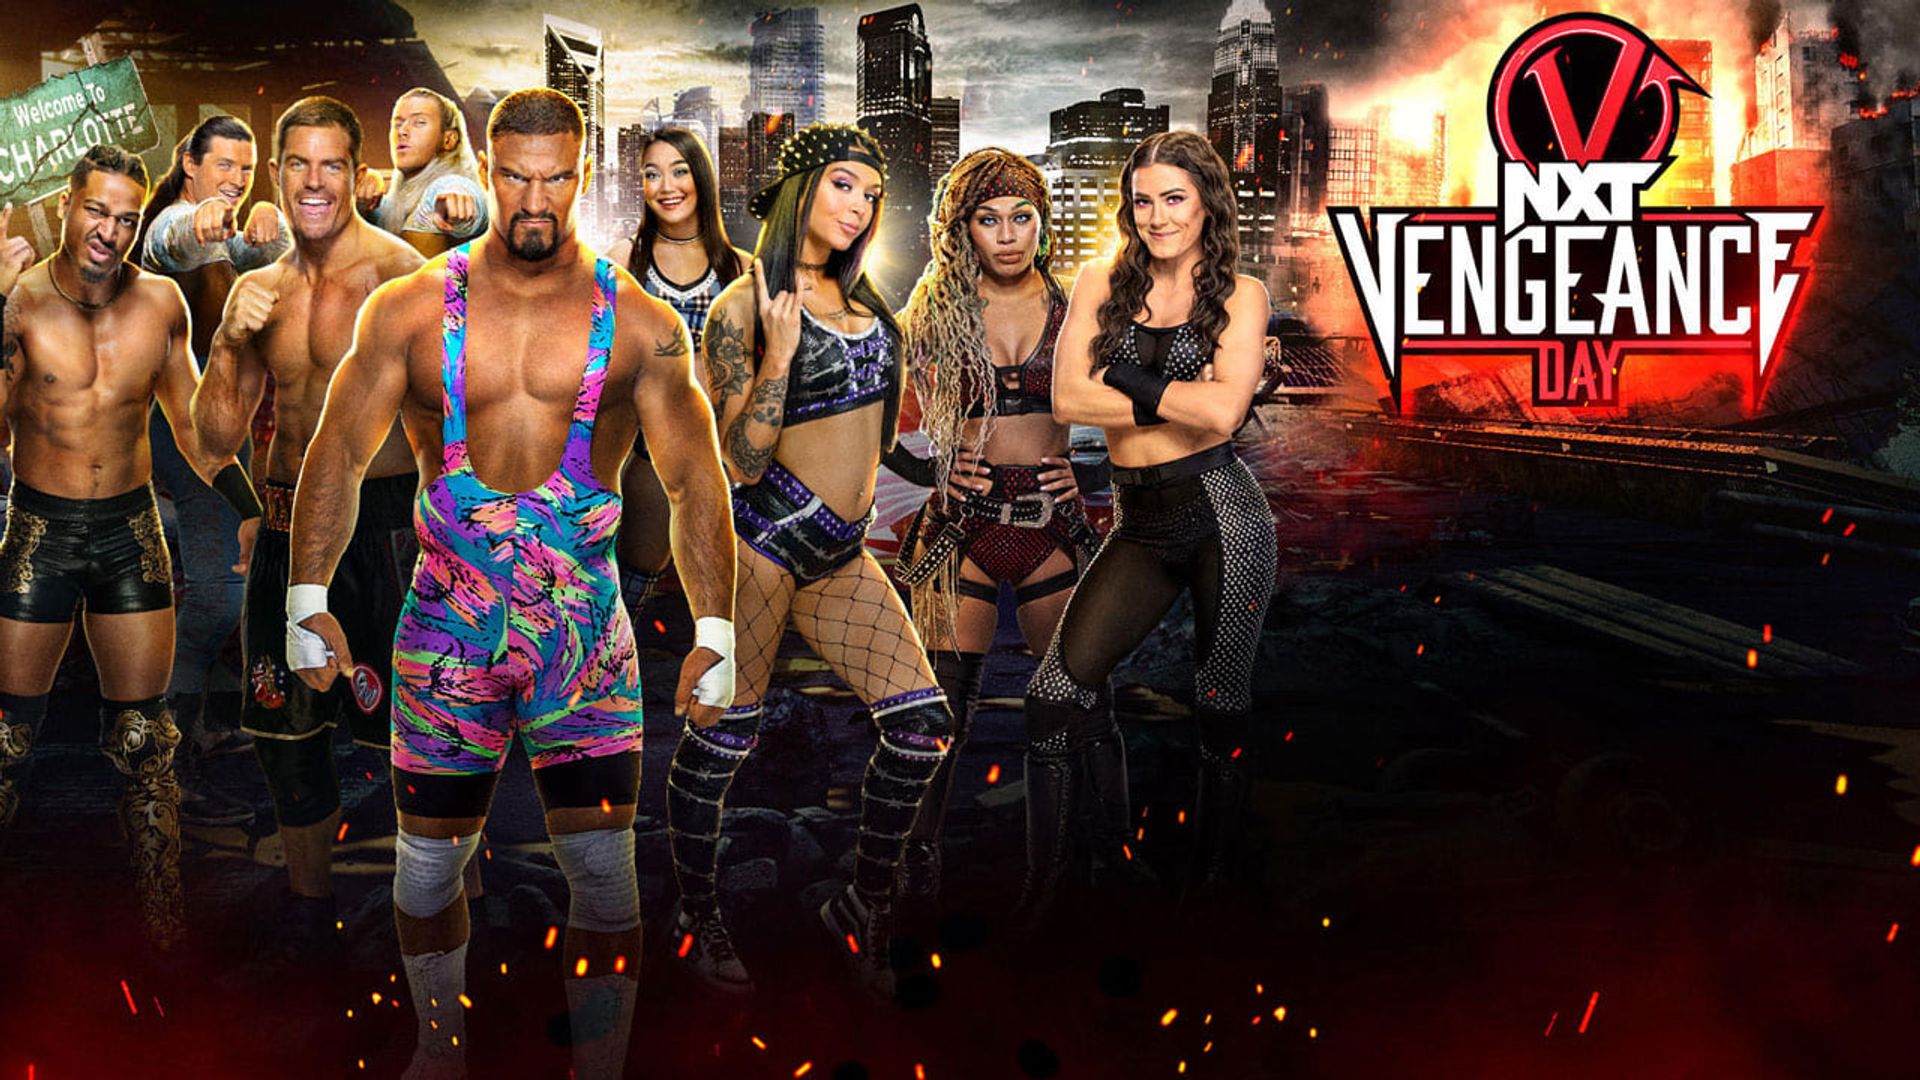 NXT Vengeance Day background